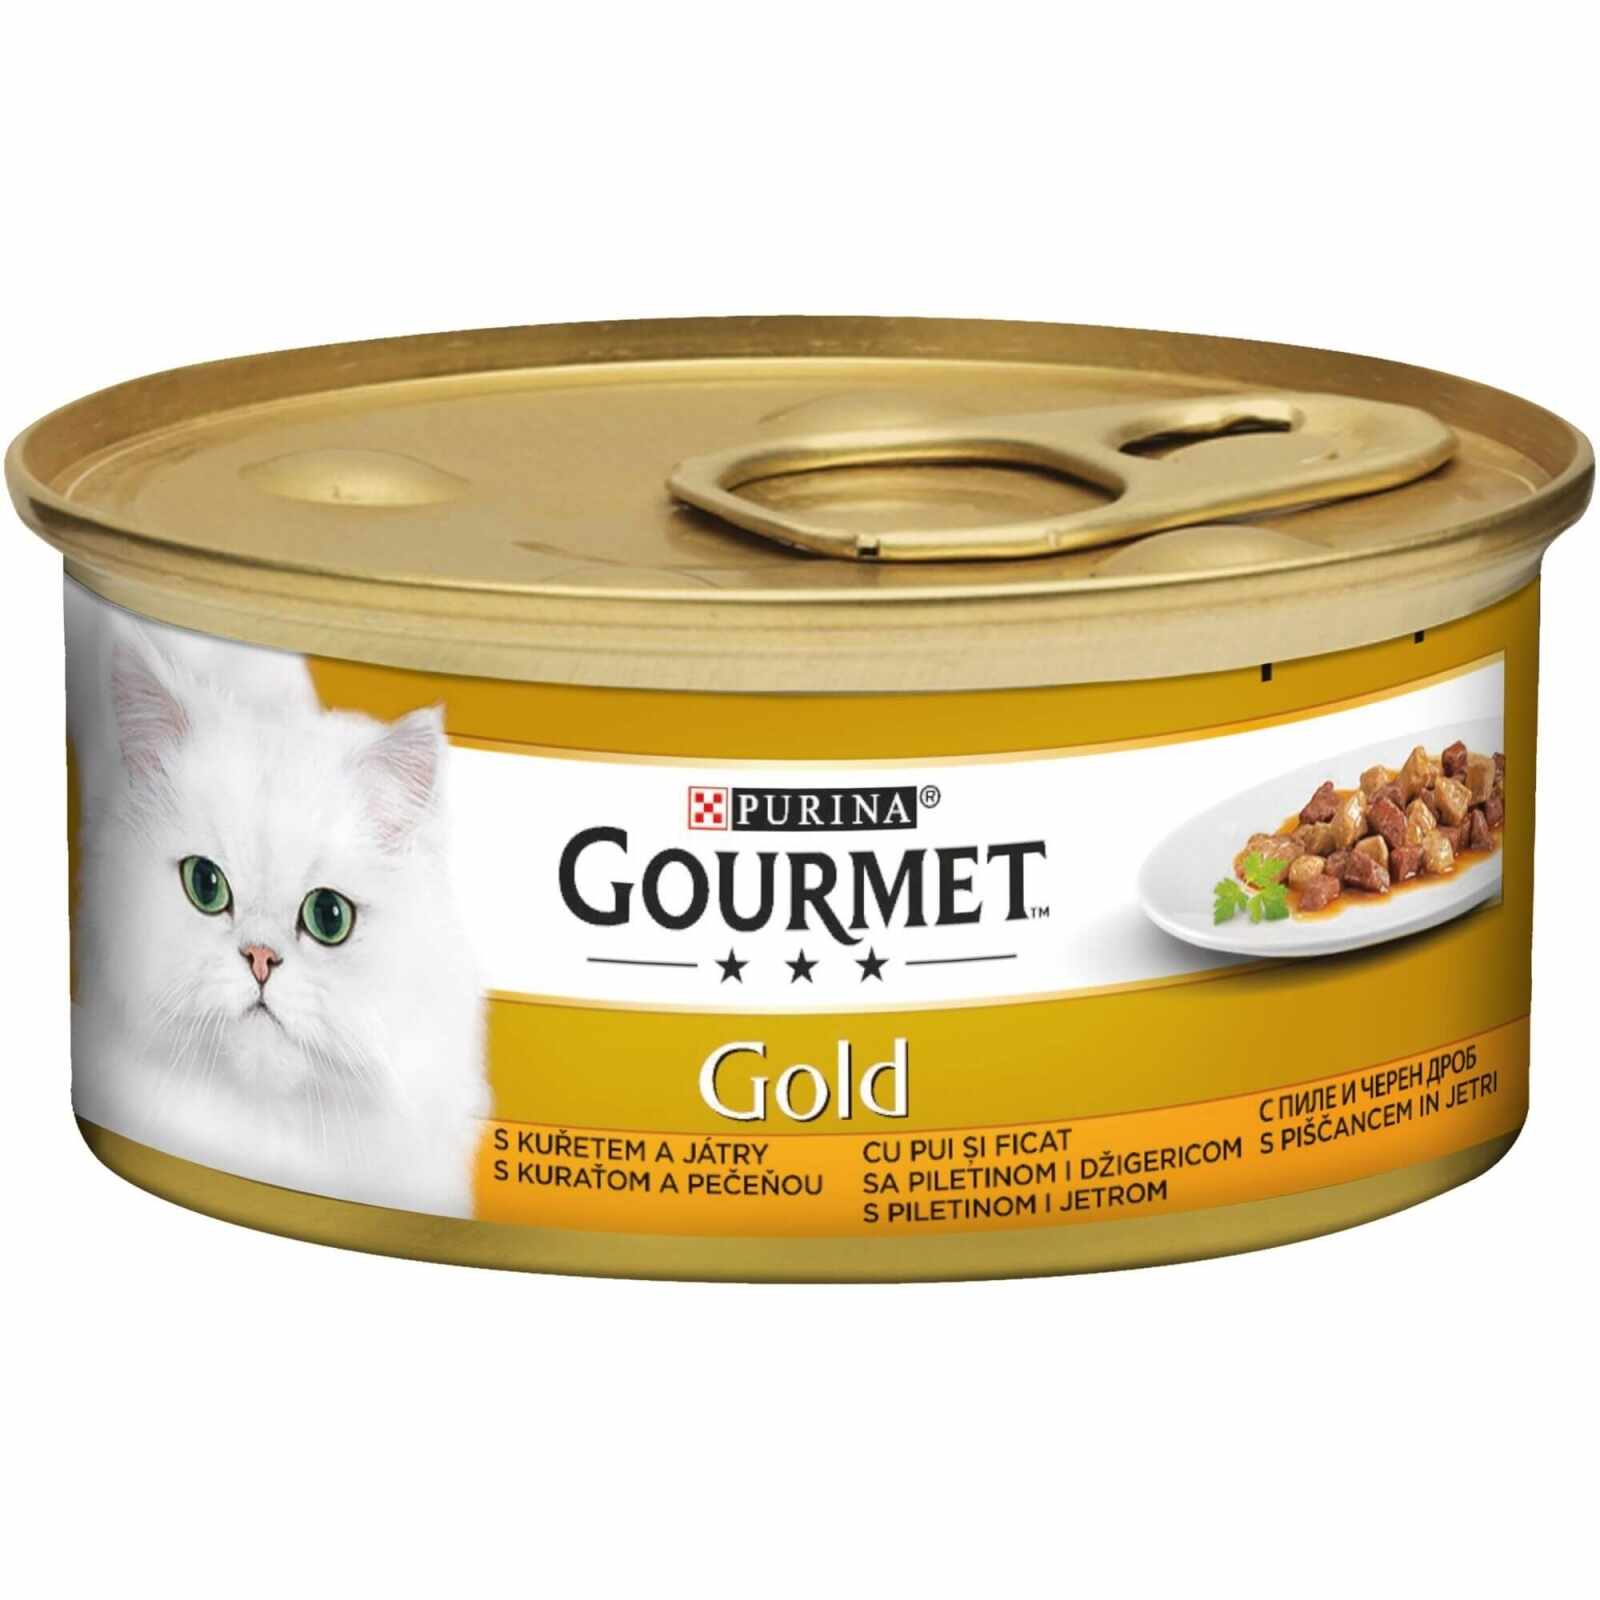 Gourmet Gold Bucatele de Carne in Sos, Pui si Ficat, 85 g